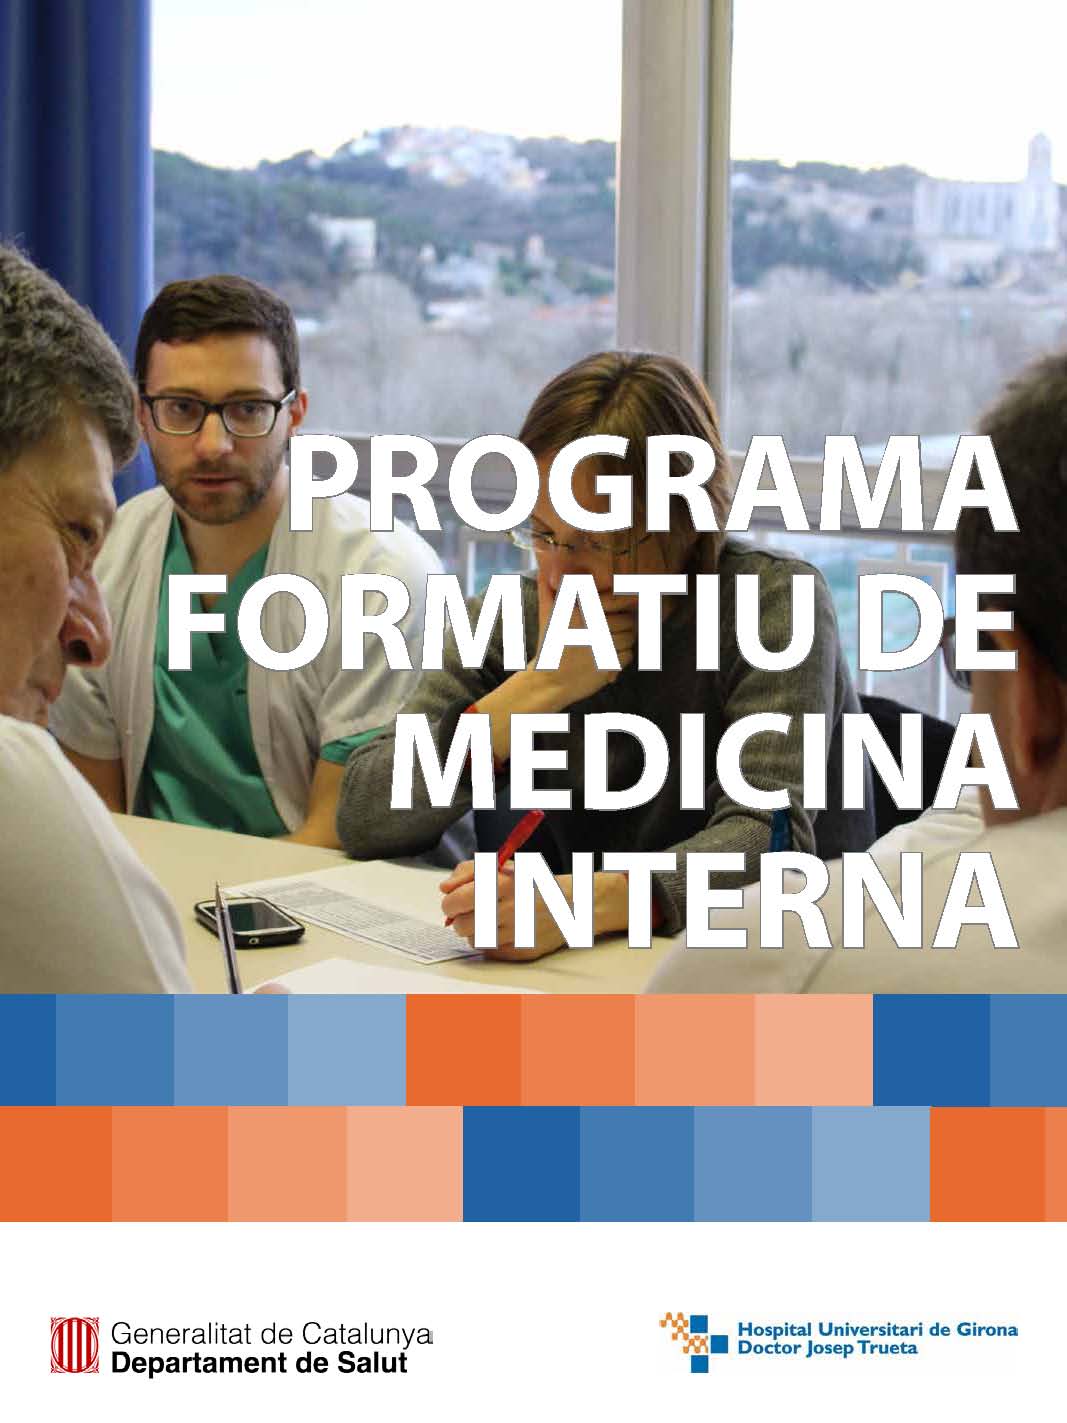 Programa formatiu medicina interna